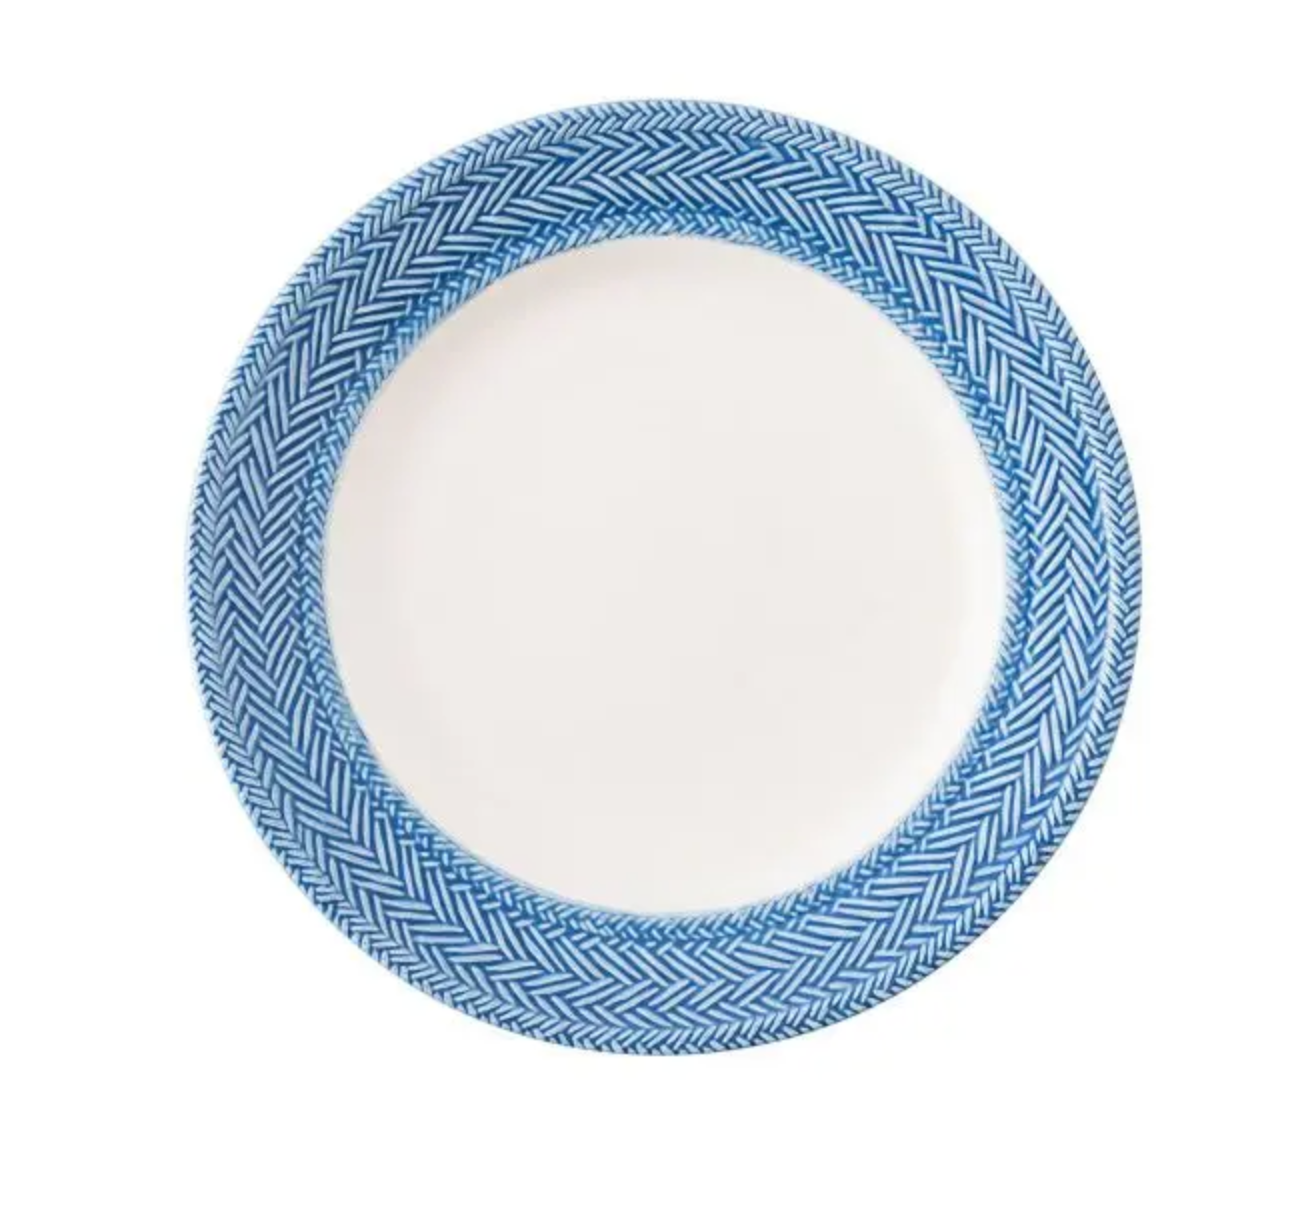 JULISKA Le Panier Delft Blue Dessert/Salad Plate-Set/4